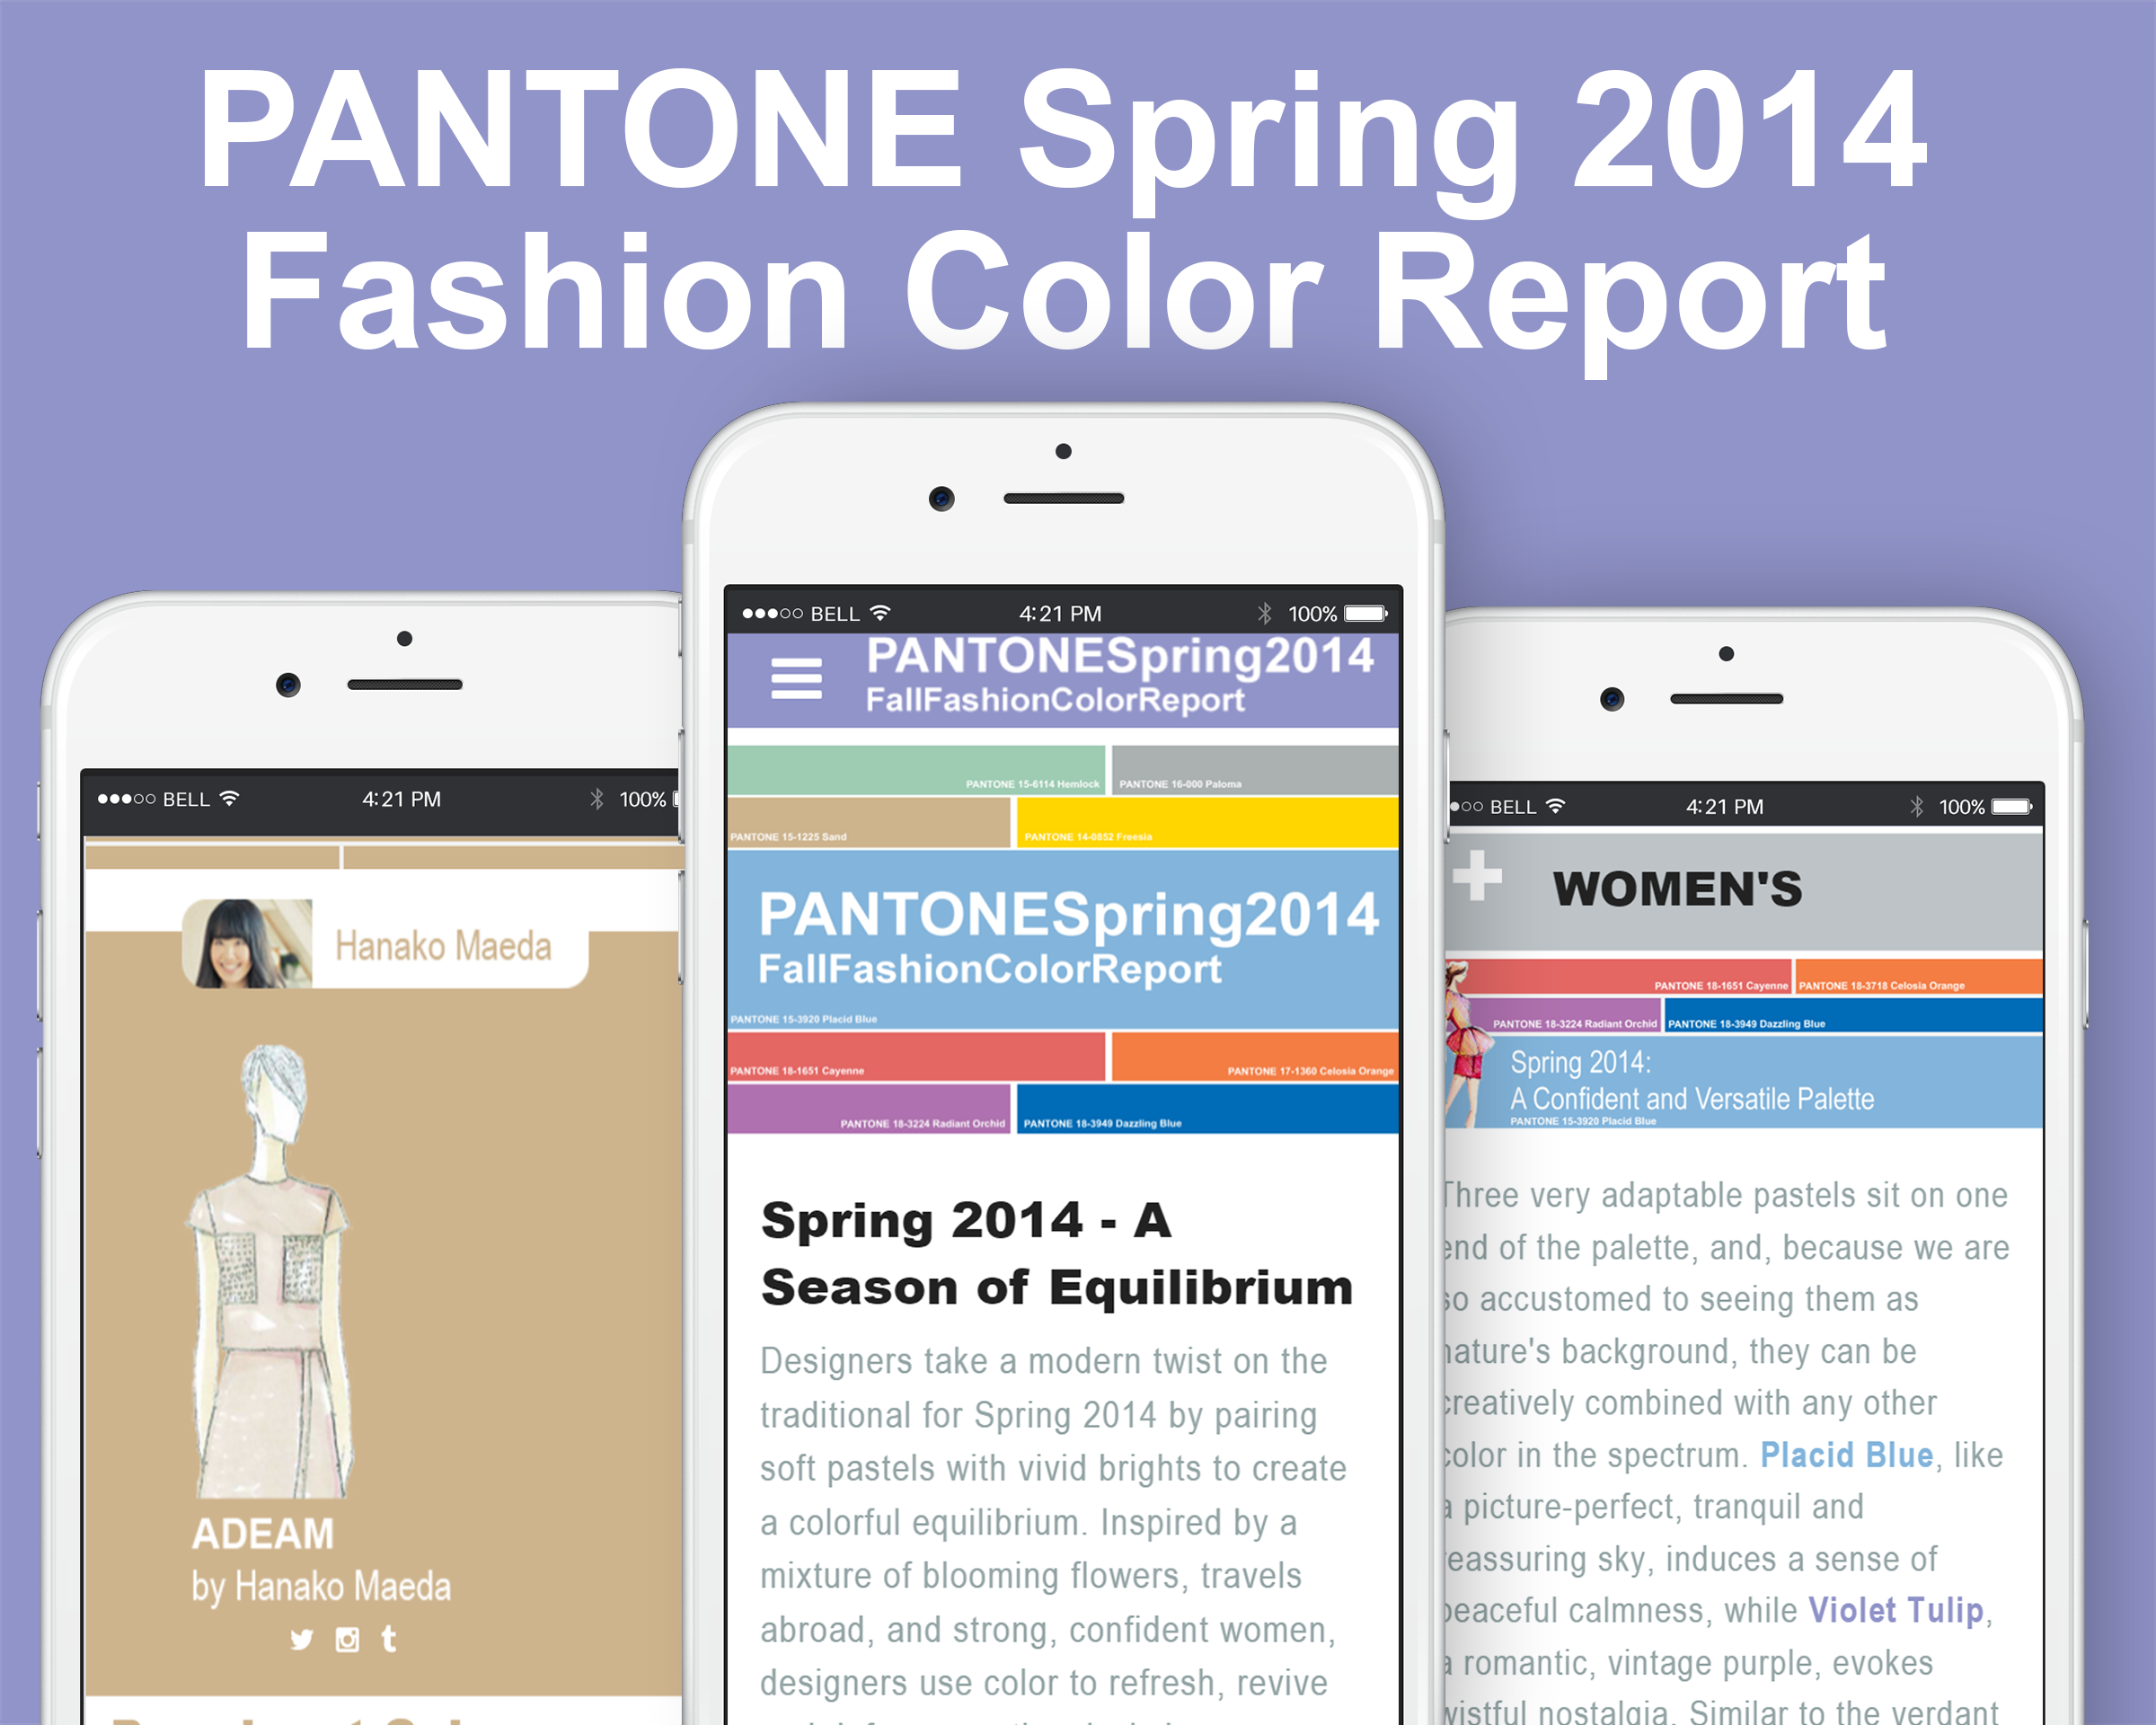 Pantone Spring 2014 - Fashion Color Report